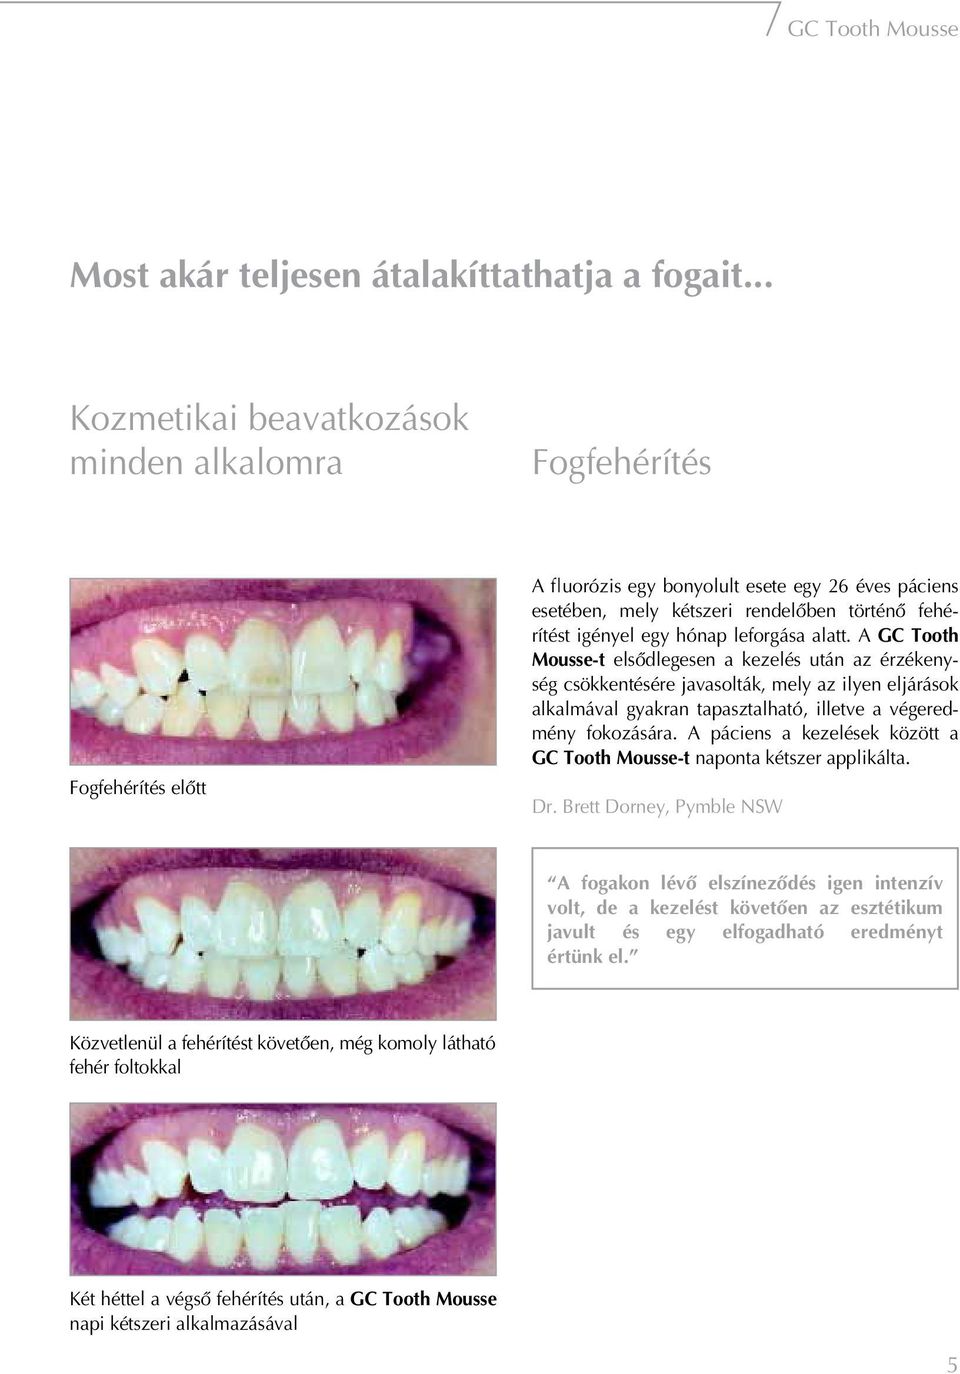 GC Tooth Mousse. Portfolió - PDF Free Download